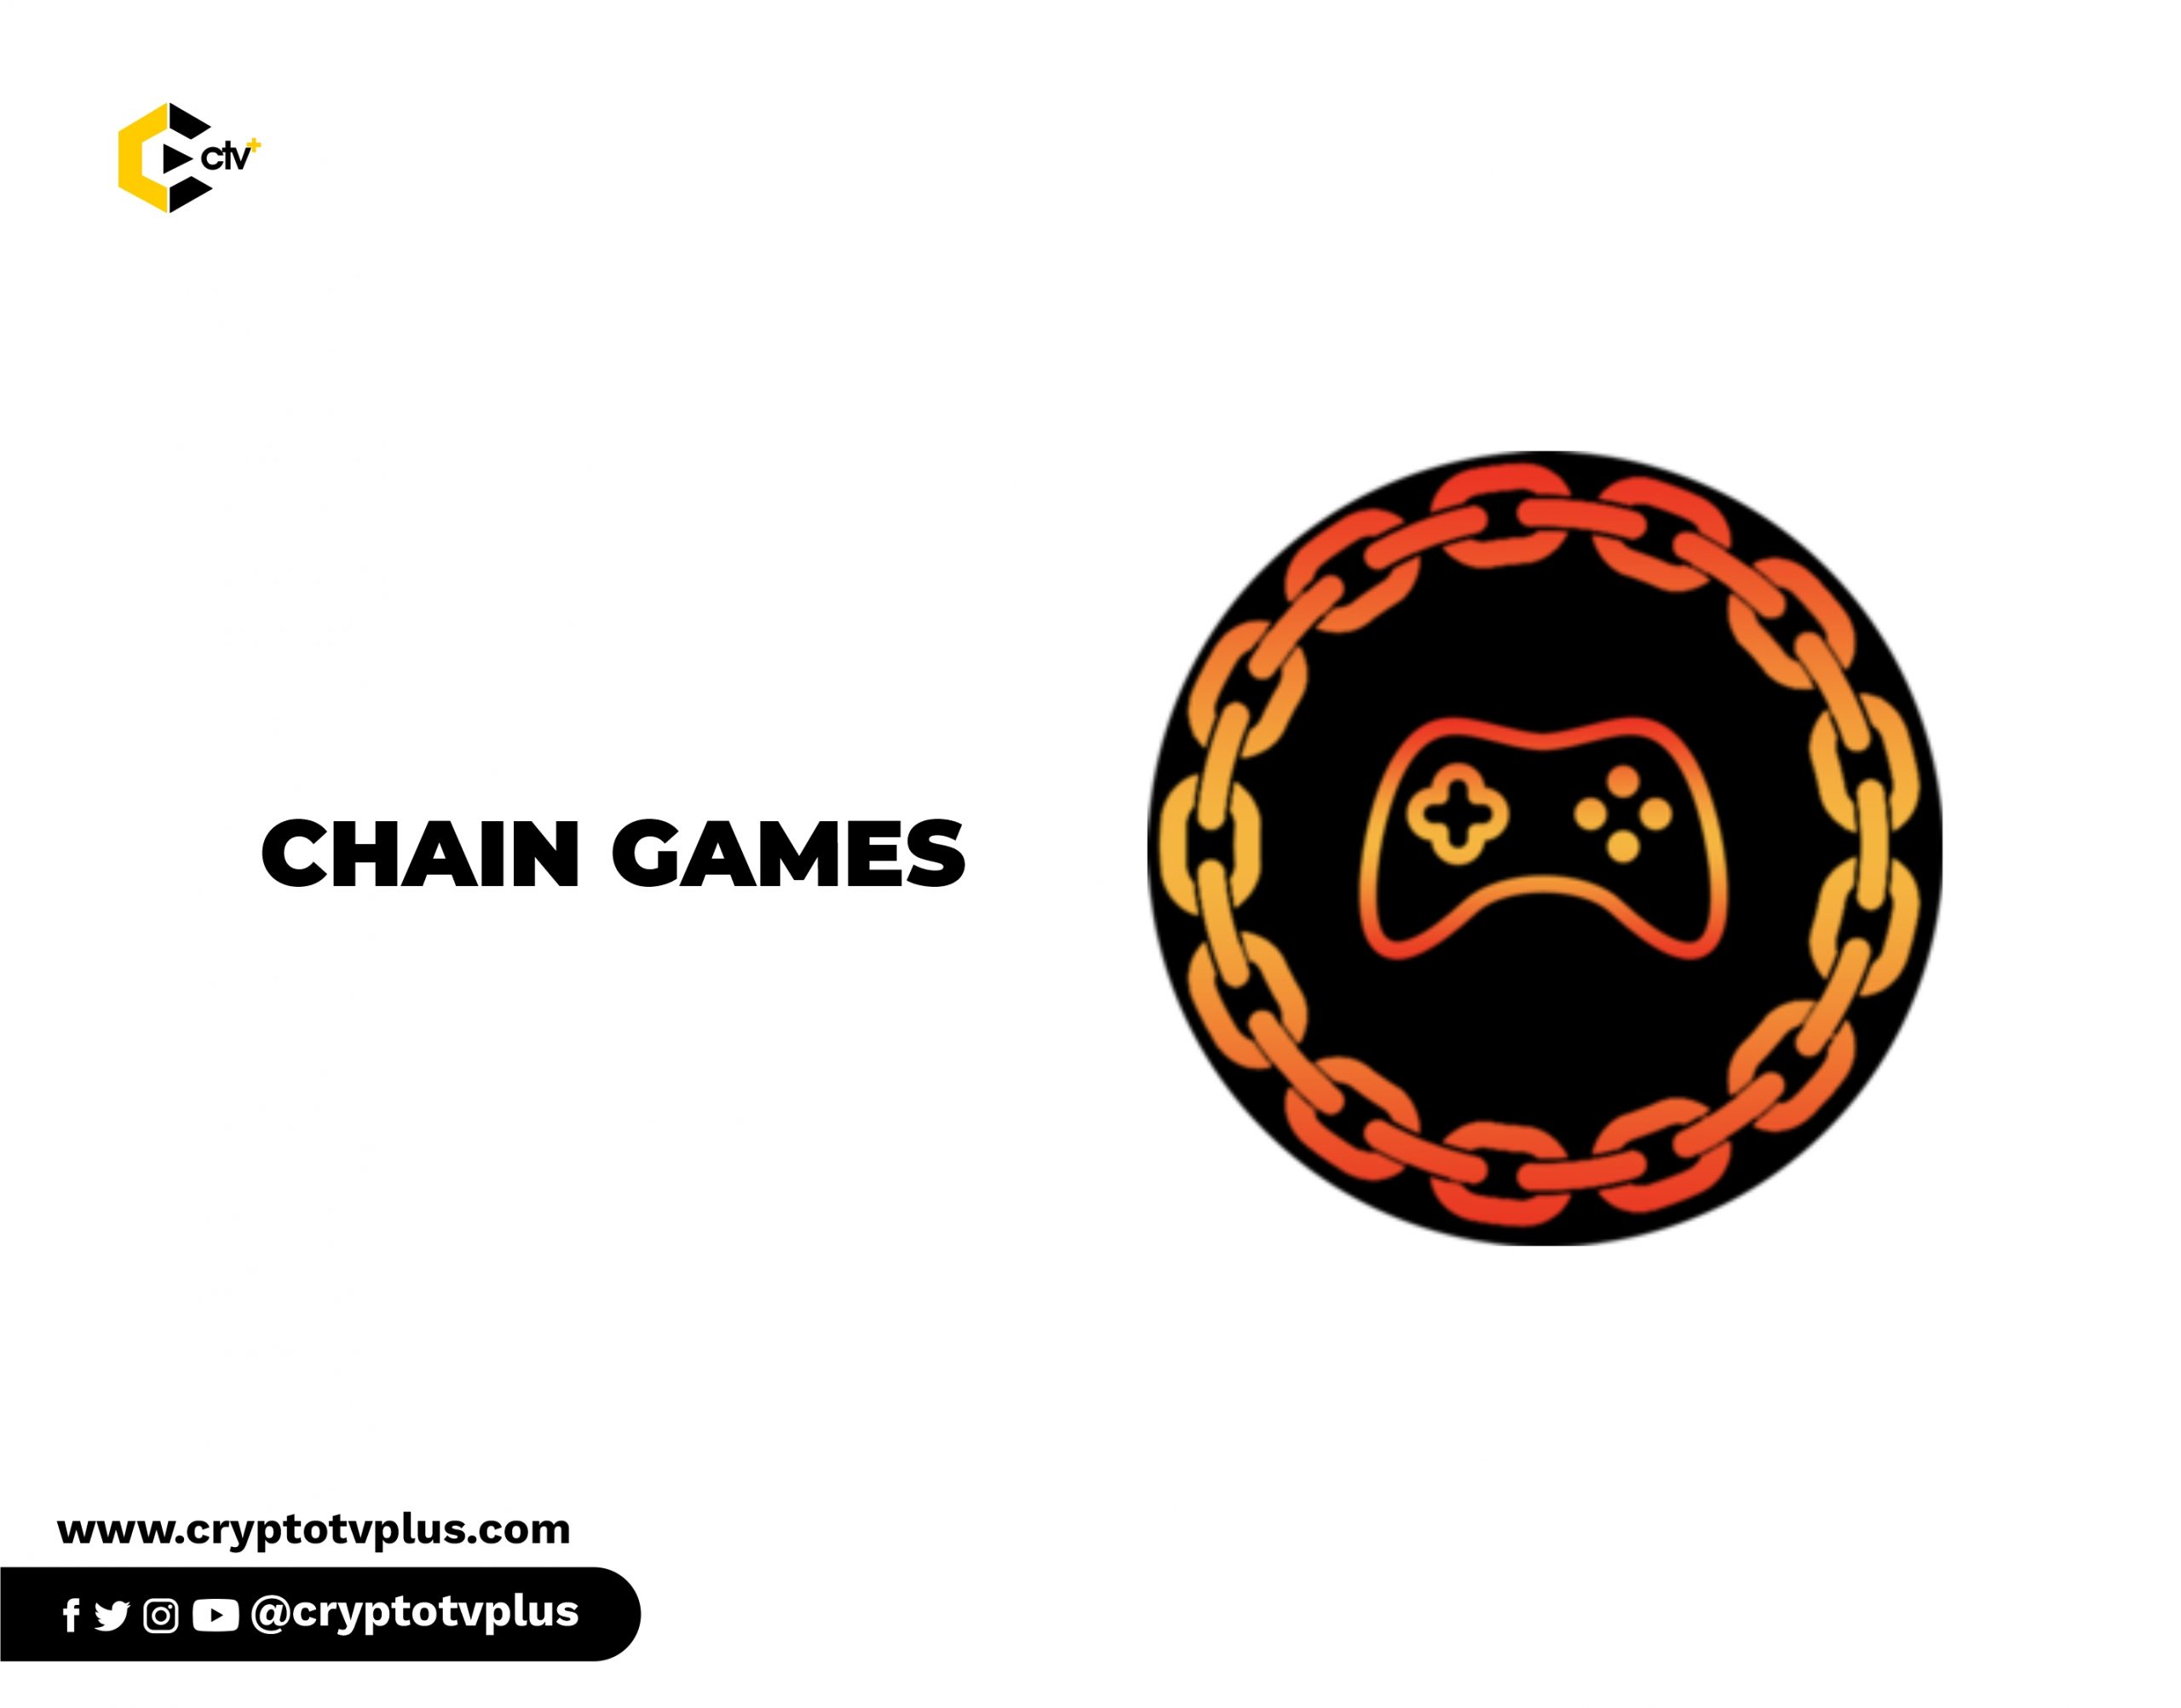 PolkaCity & Chain Games: A Partnership to enhance & redefine blockchain gaming 

